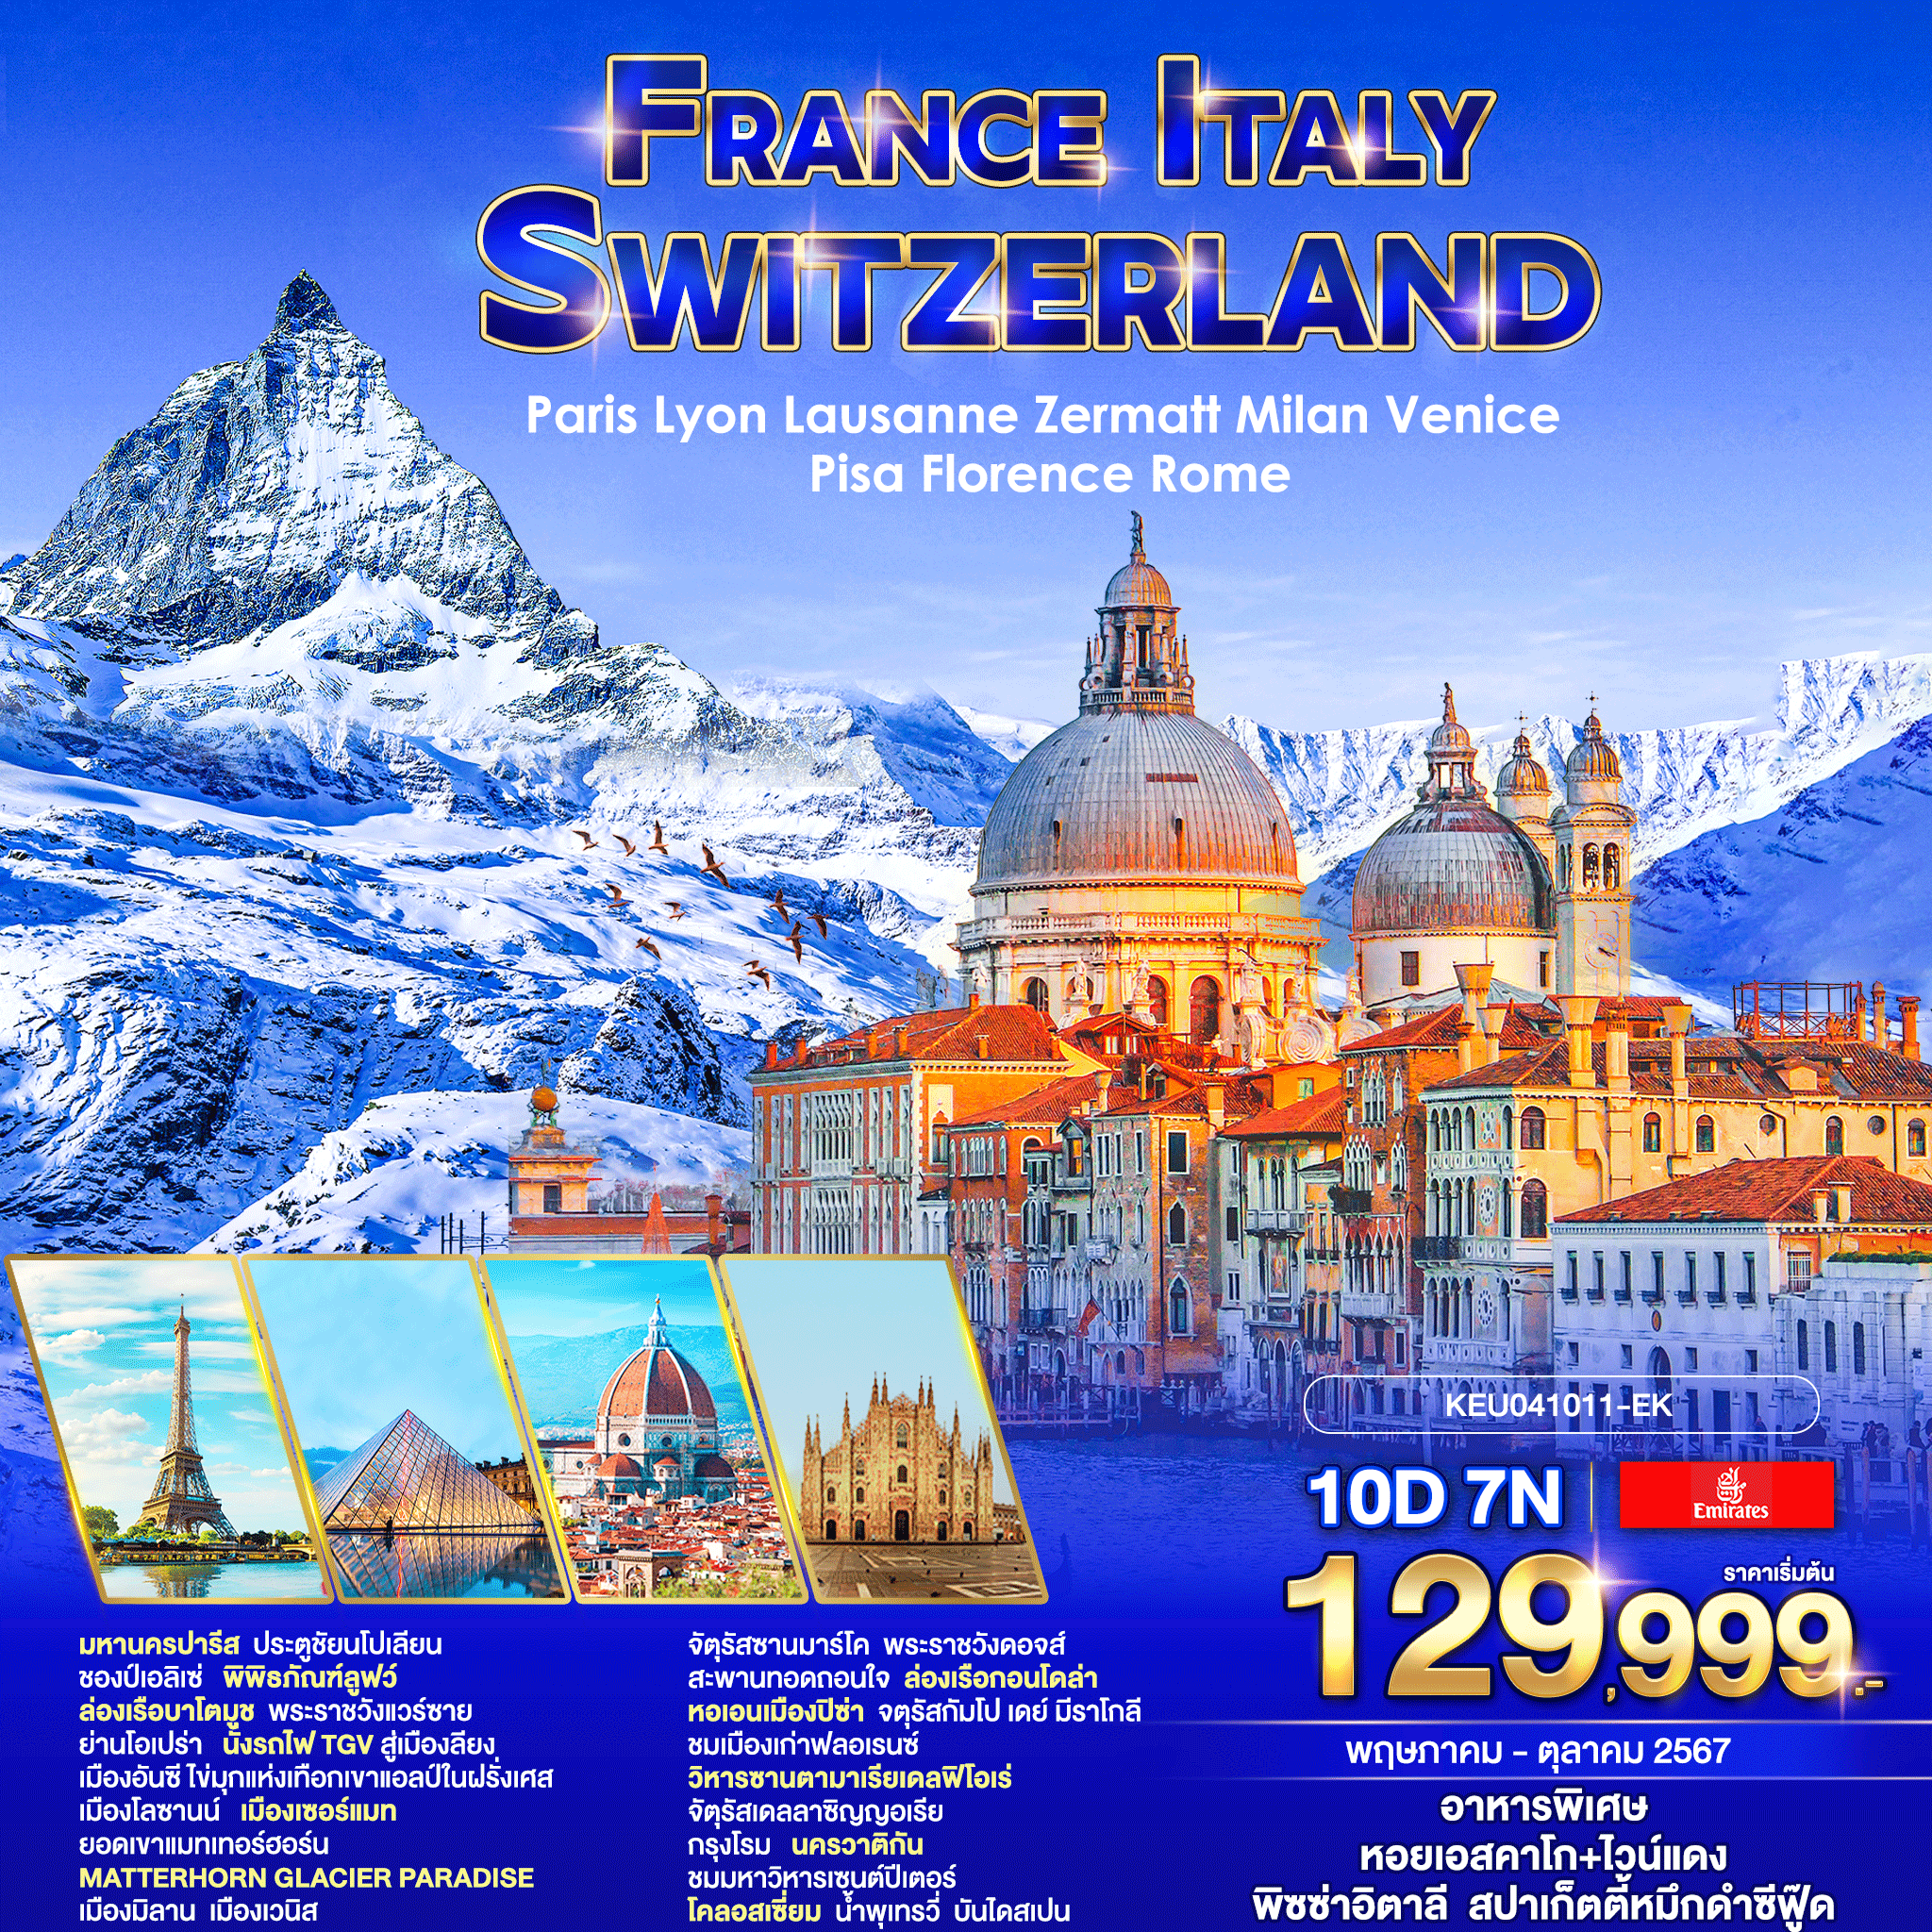 FRANCE ITALY SWITZERLAND Paris Lyon Lausanne Zermatt Milan Venice Pisa Florence Rome ฝรั่งเศส อิตาลี สวิตเซอร์แลนด์ 10 วัน 7 คืน เริ่มต้น 129,999.- Emirates Airline (EK)